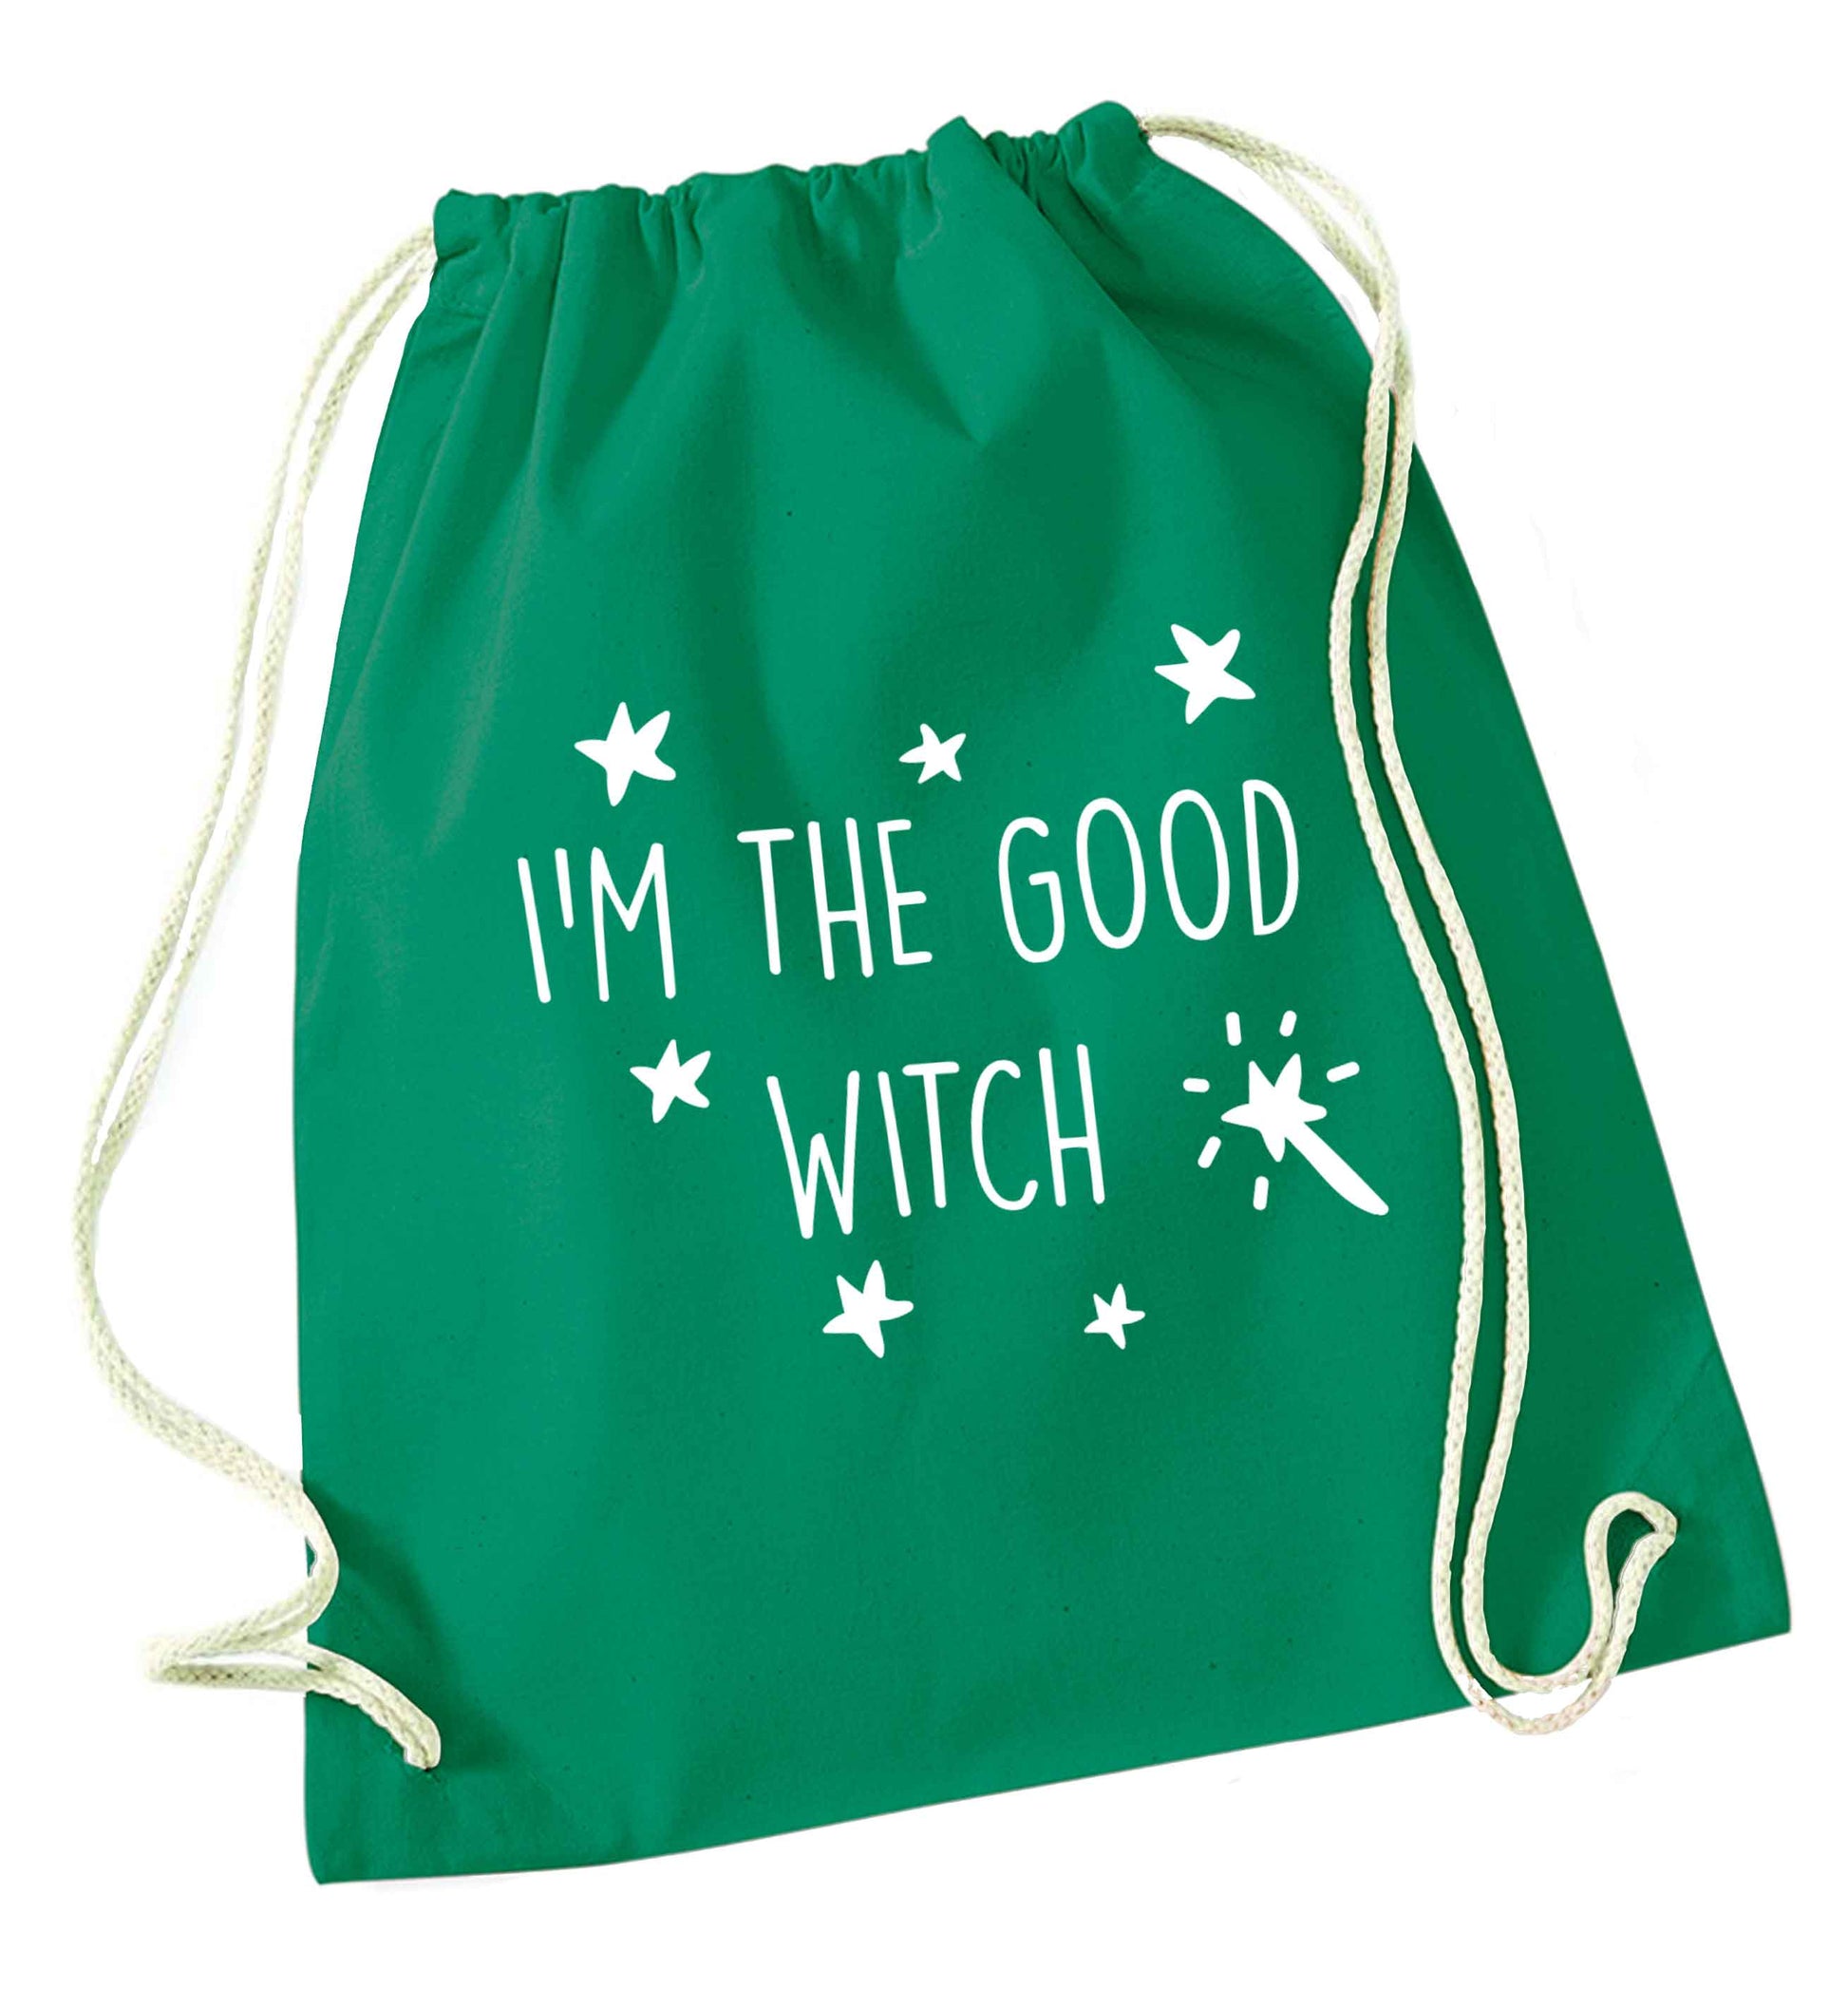 Good witch green drawstring bag